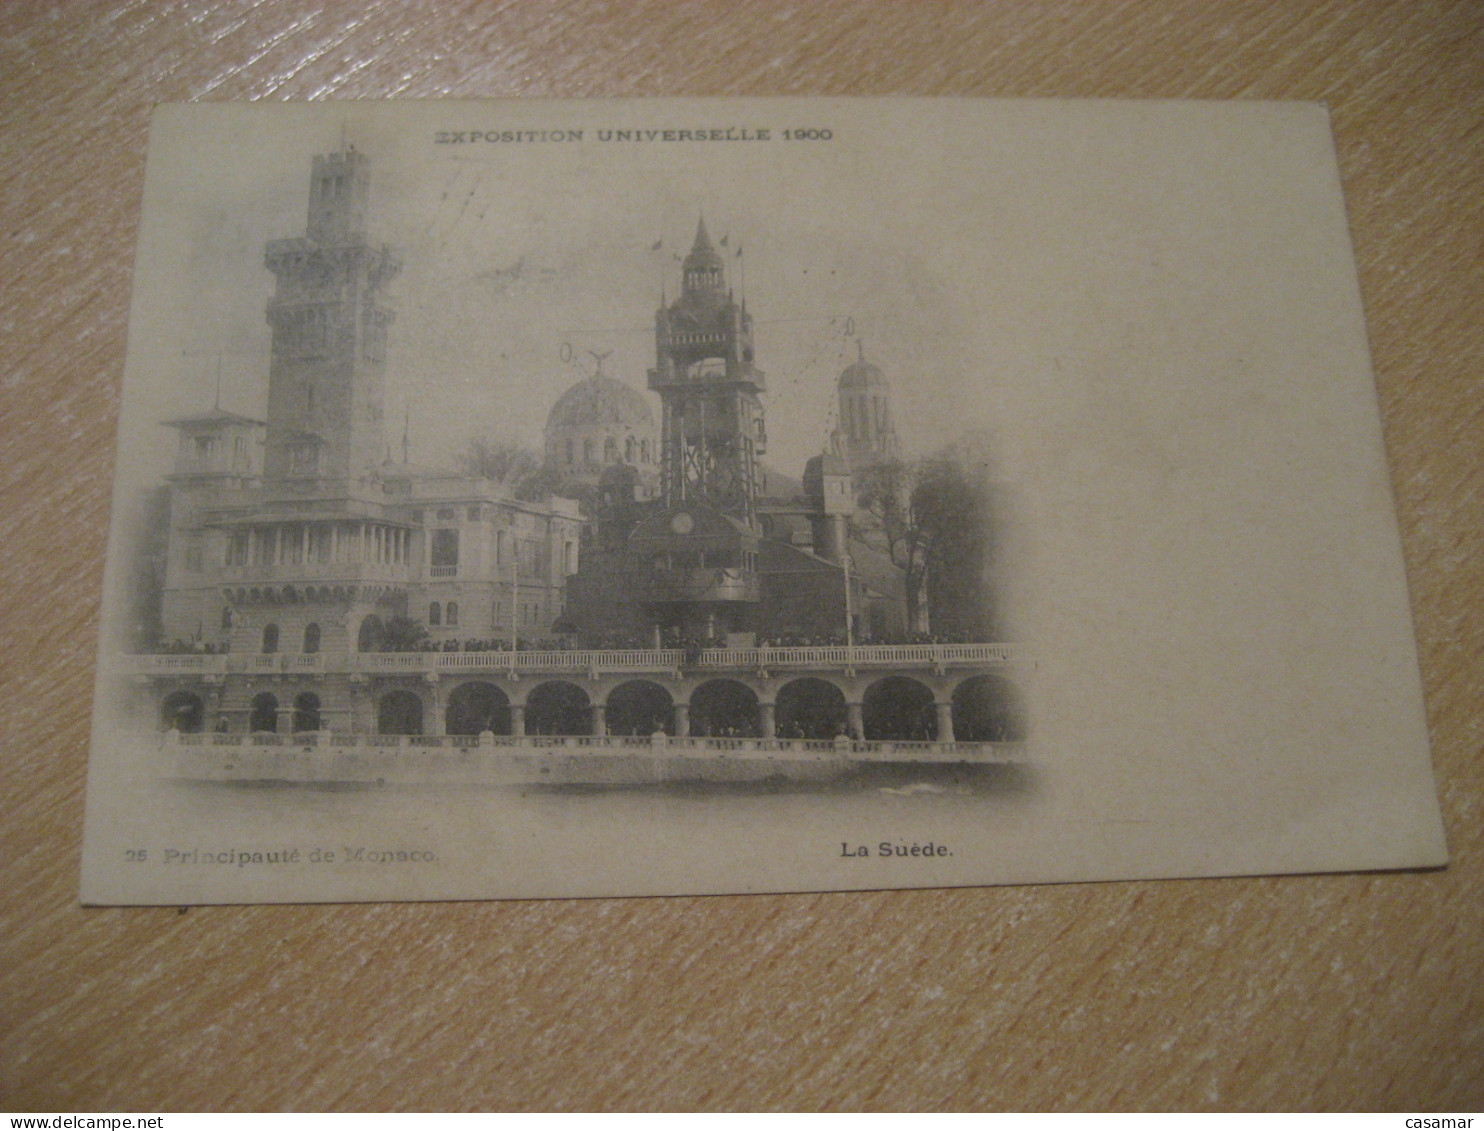 PARIS 1900 Universal Exposition Cancel To Montpellier Principaute De Monaco La Suede Postcard FRANCE Expo Universelle - 1900 – Parigi (Francia)